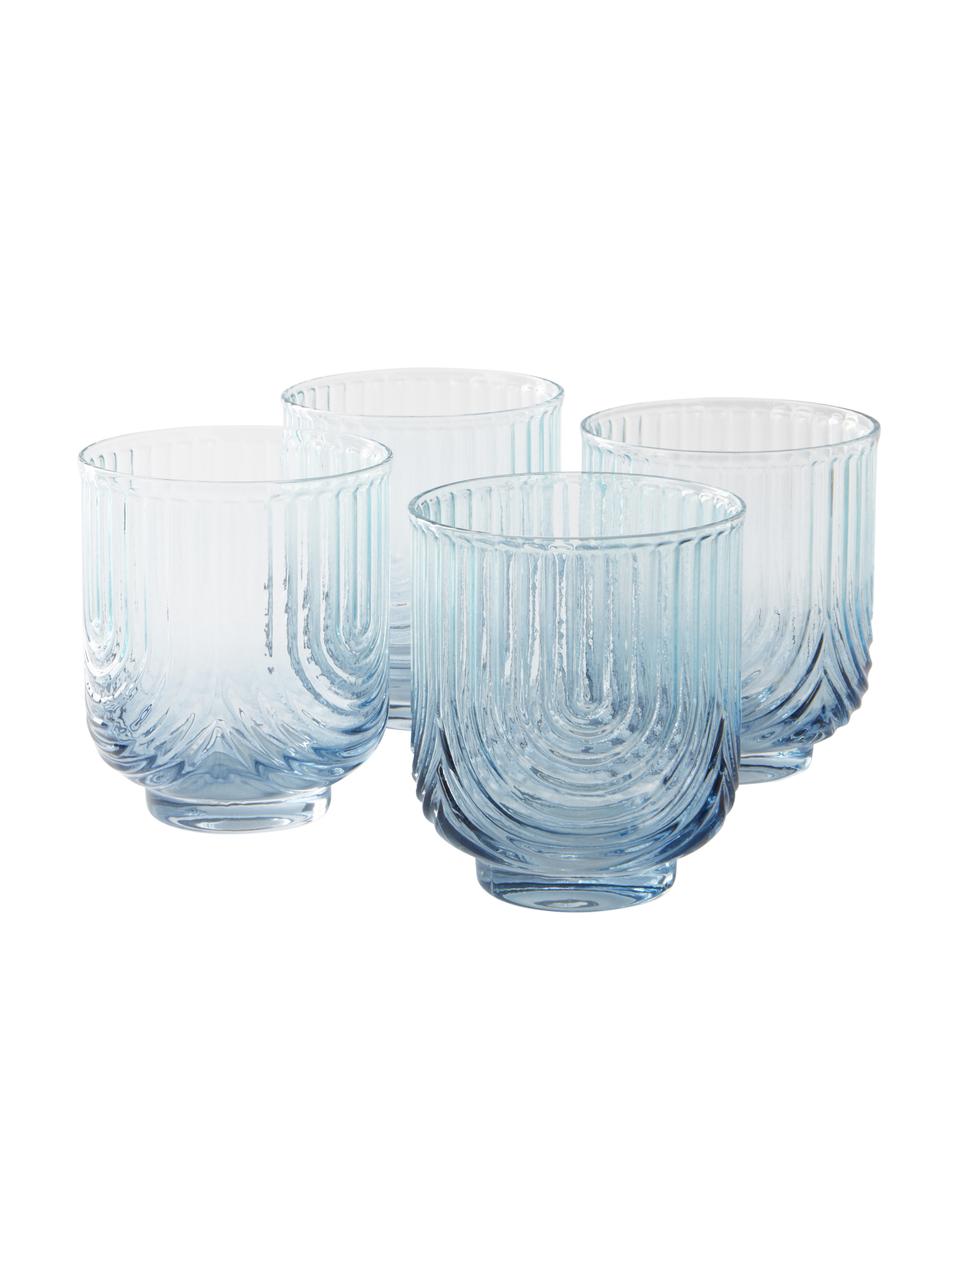 Vasos con degradado Imani, 4 uds., Vidrio, Azul, transparente, Ø 9 x Al 10 cm, 400 ml